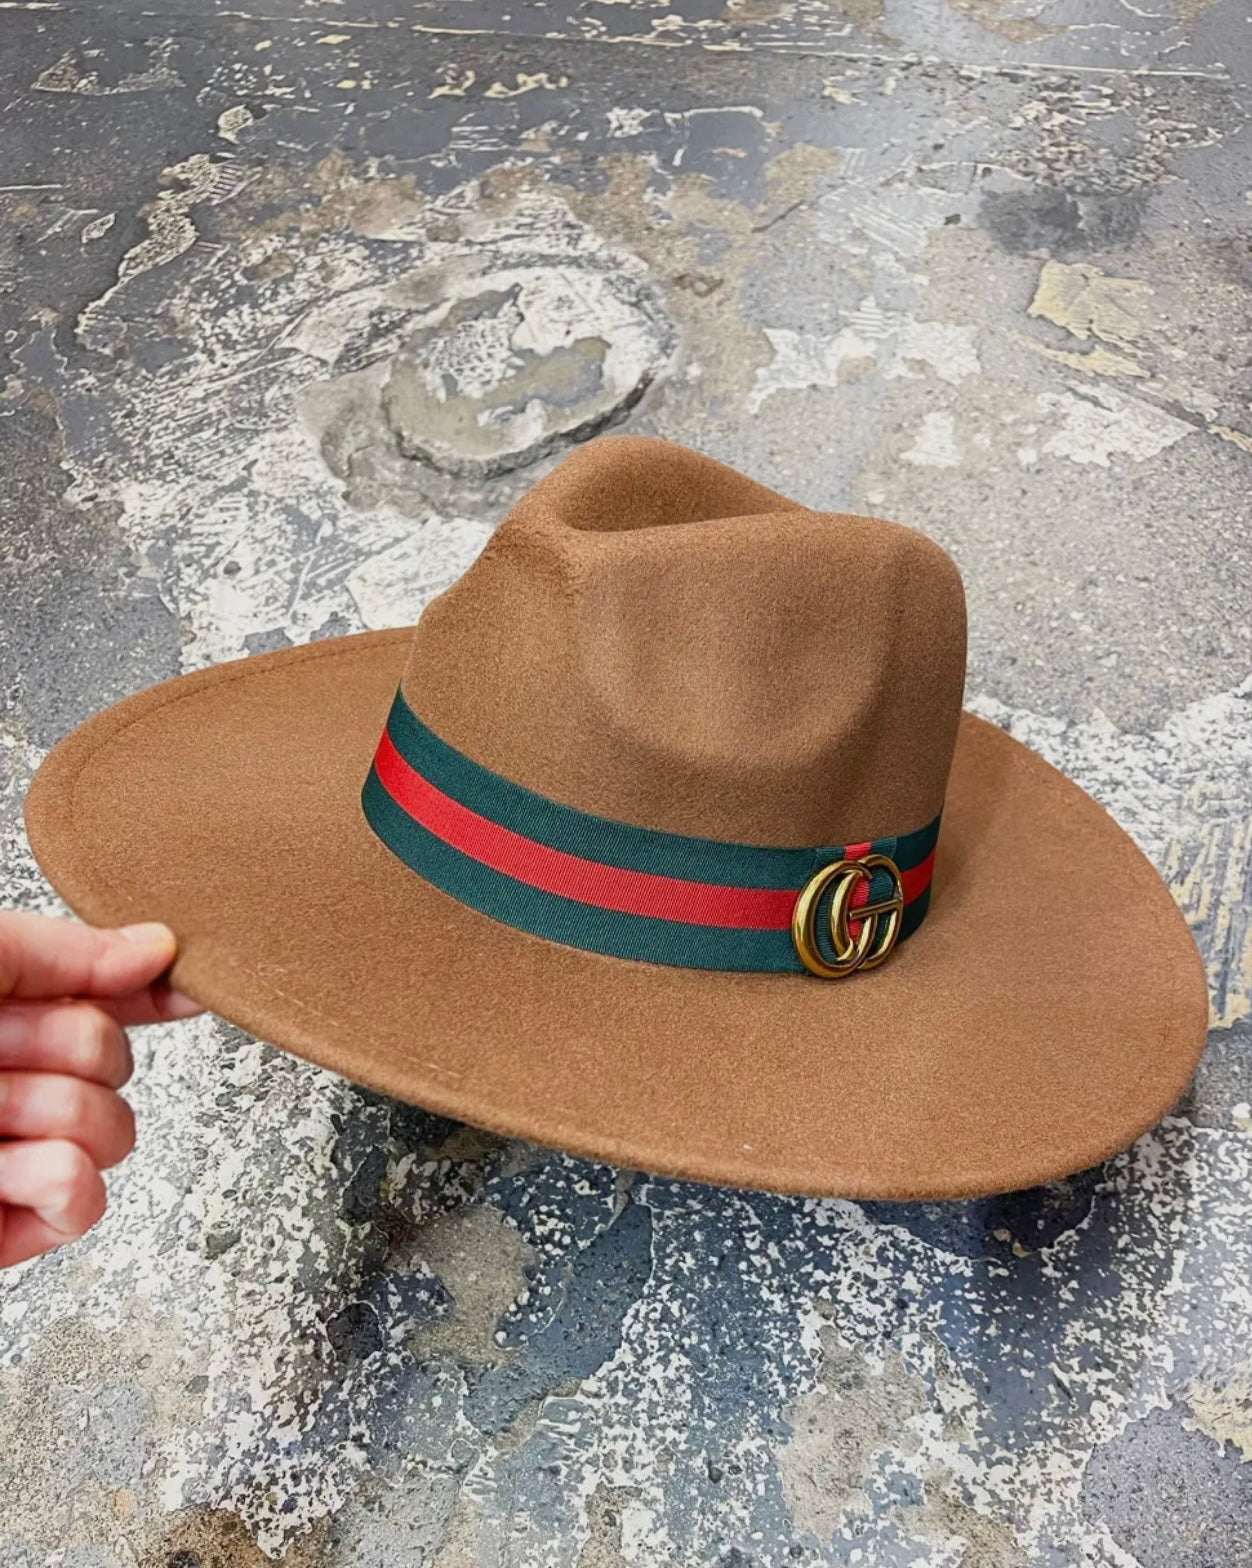 Fashion Fedora Hat